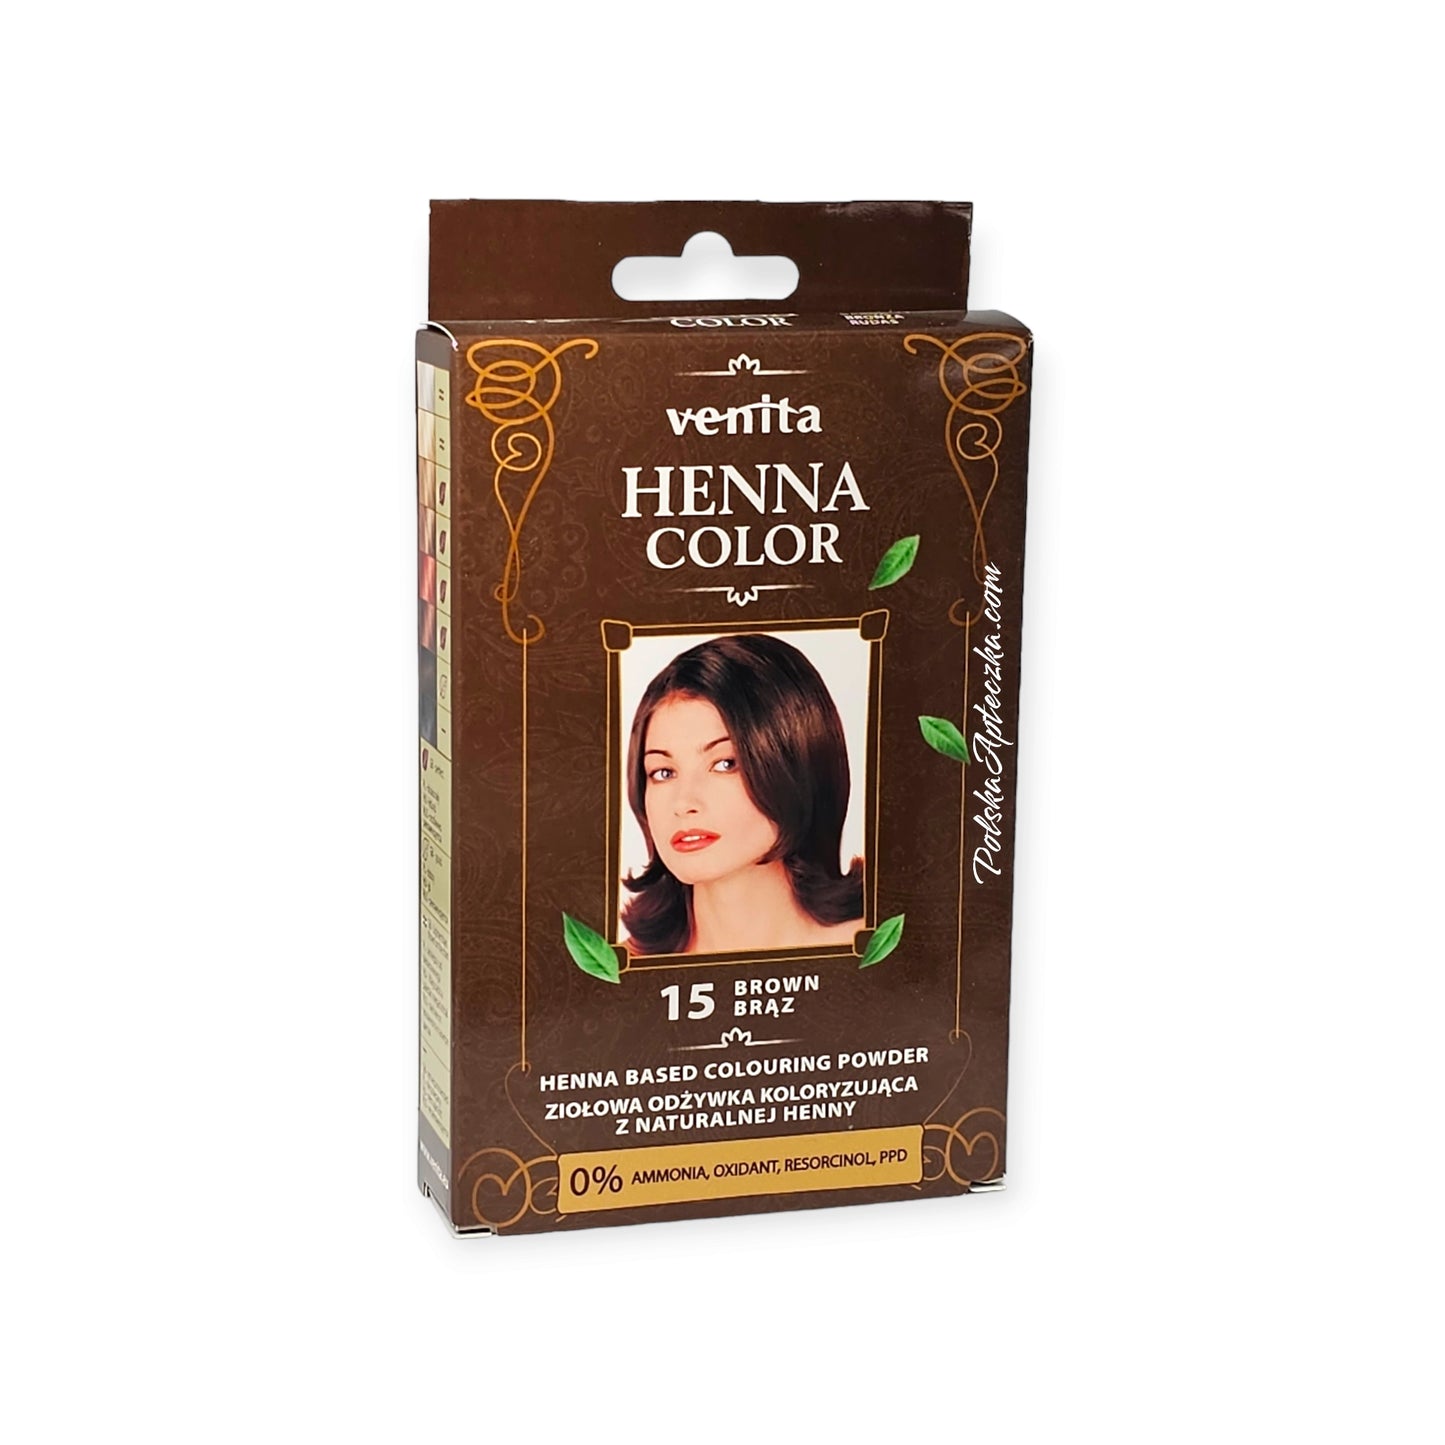 Henna Hair Color 15 Brąz (brown)